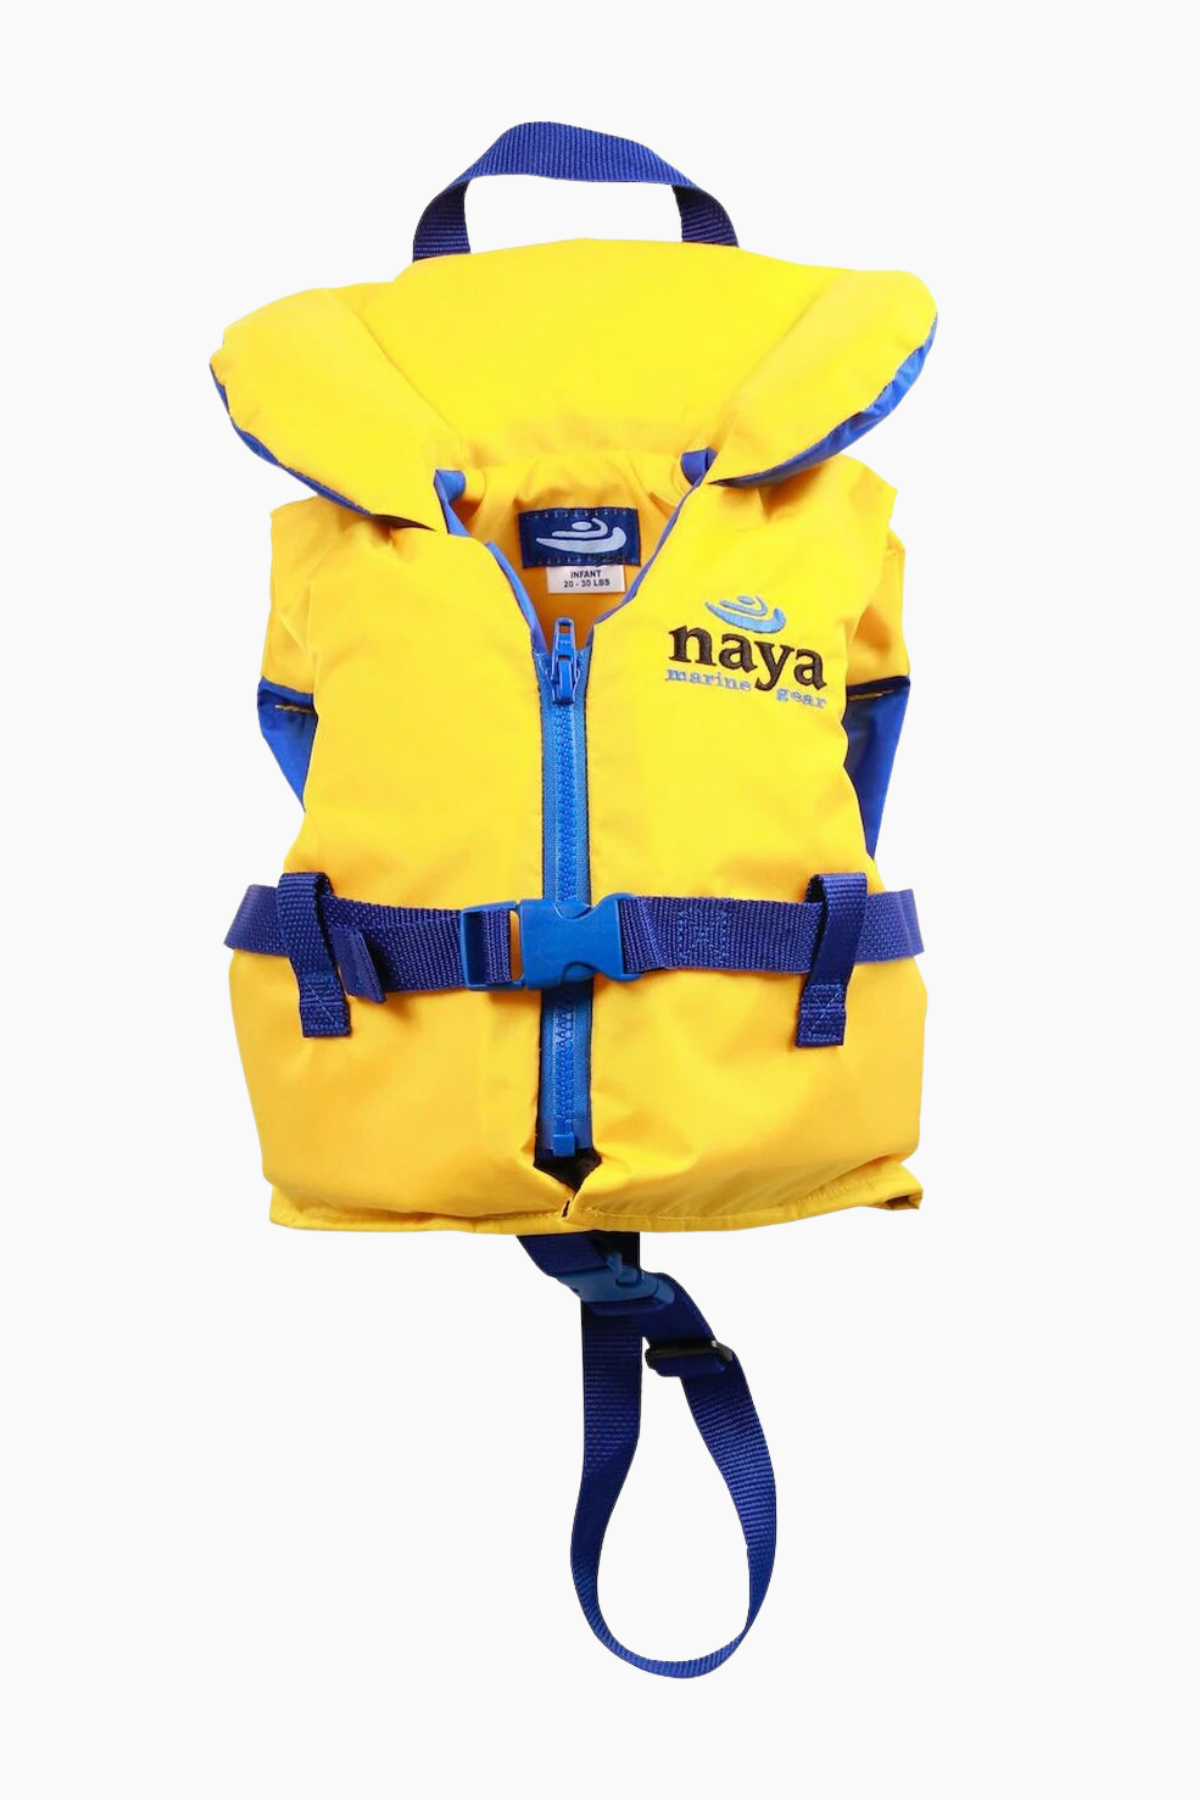 Naya Infant Life Jacket 20-30 lbs - Cottage Toys - Peterborough - Ontario - Canada